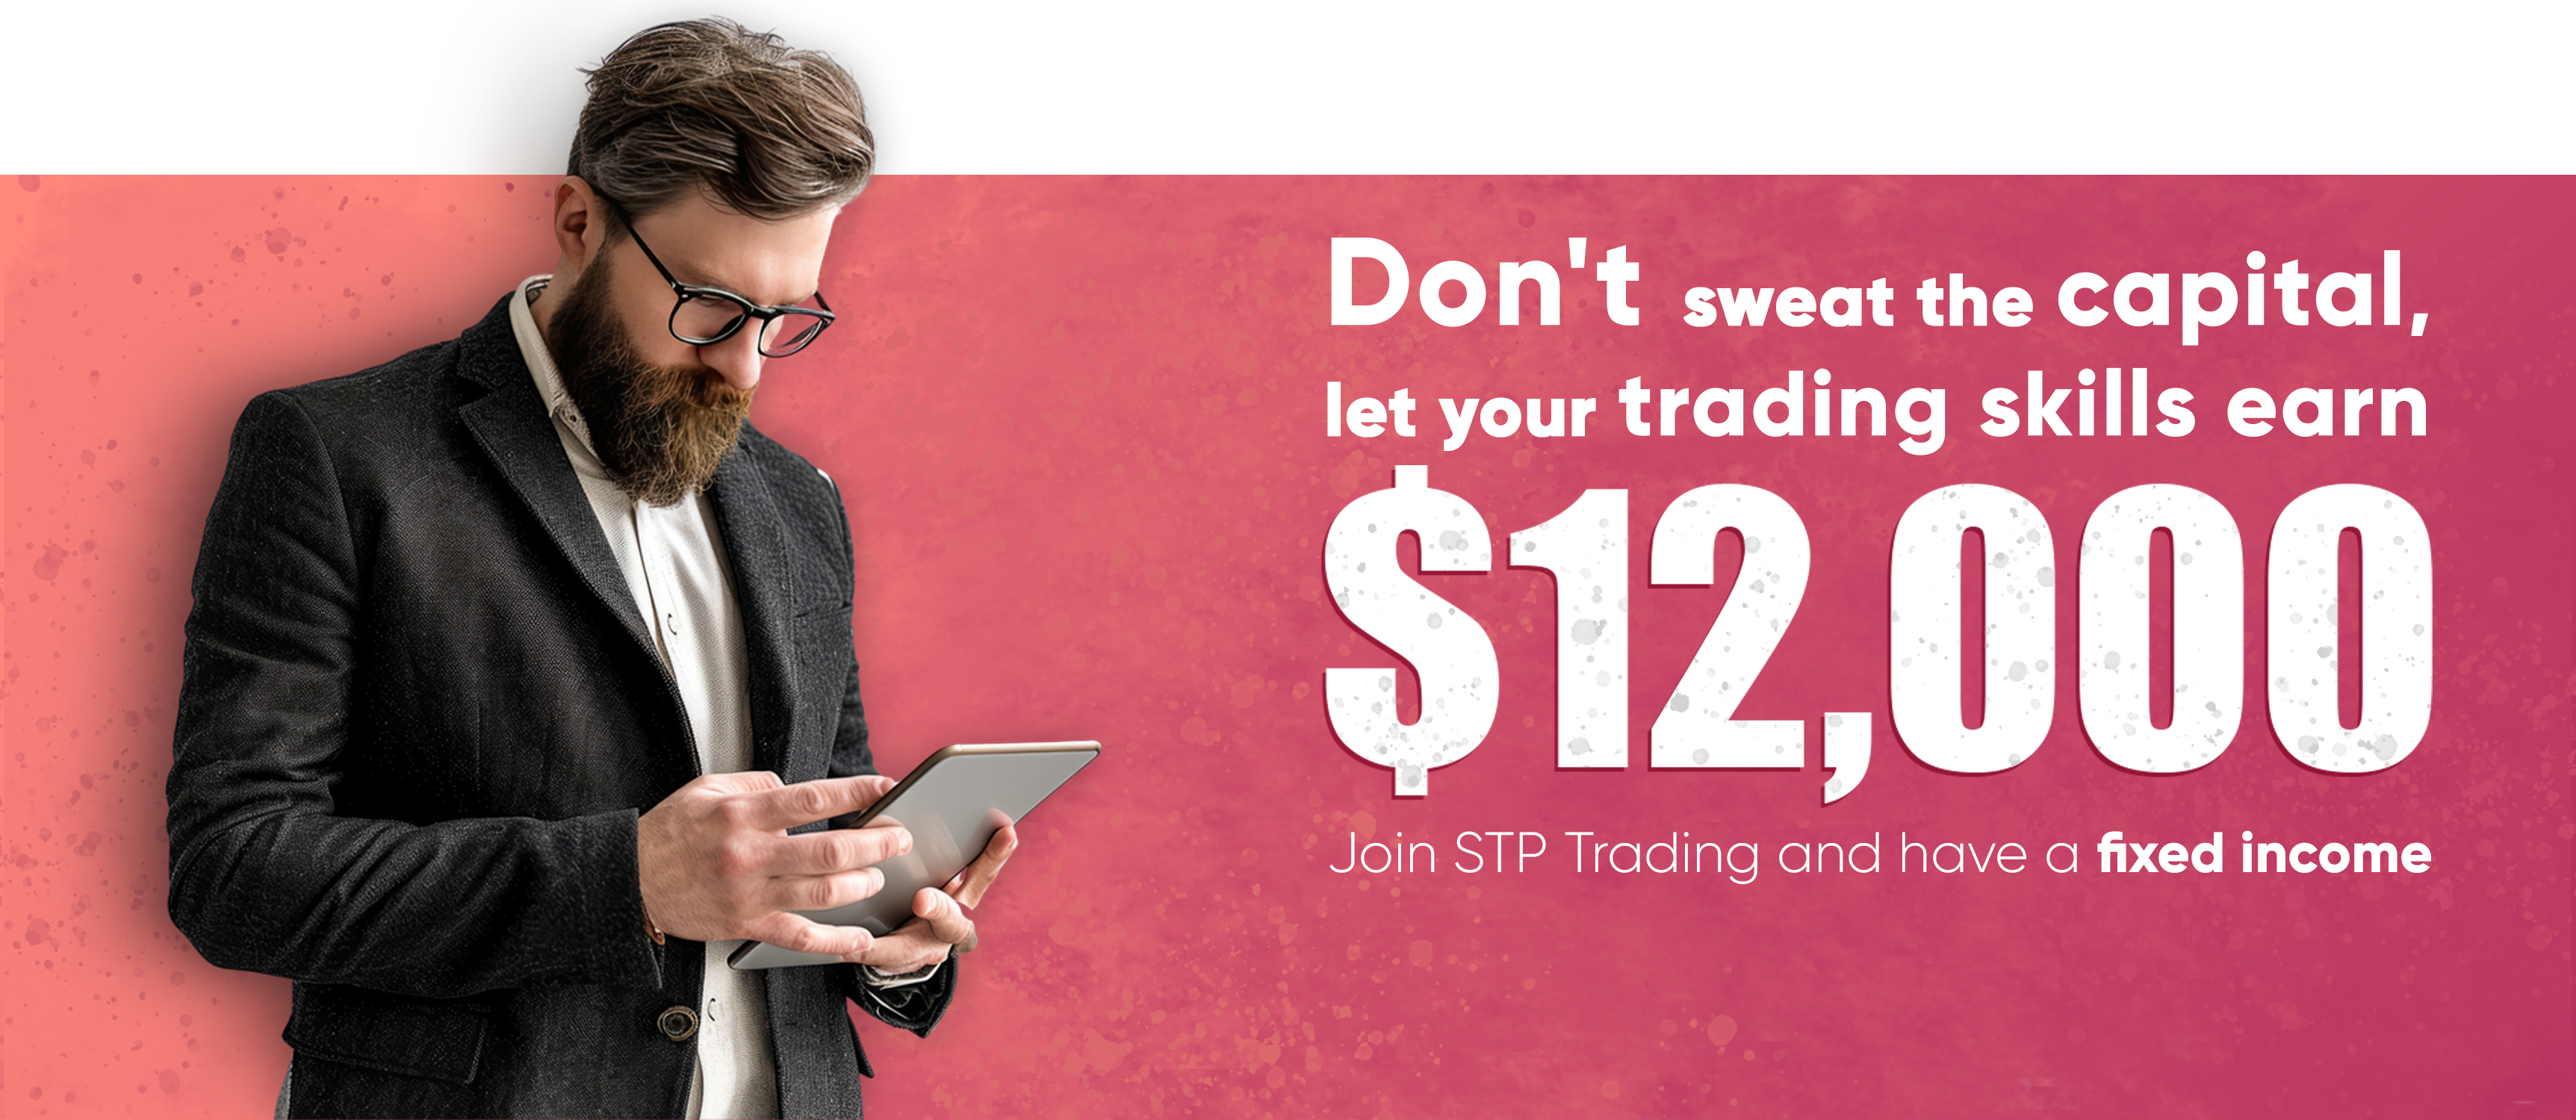 STP Trader Hiring